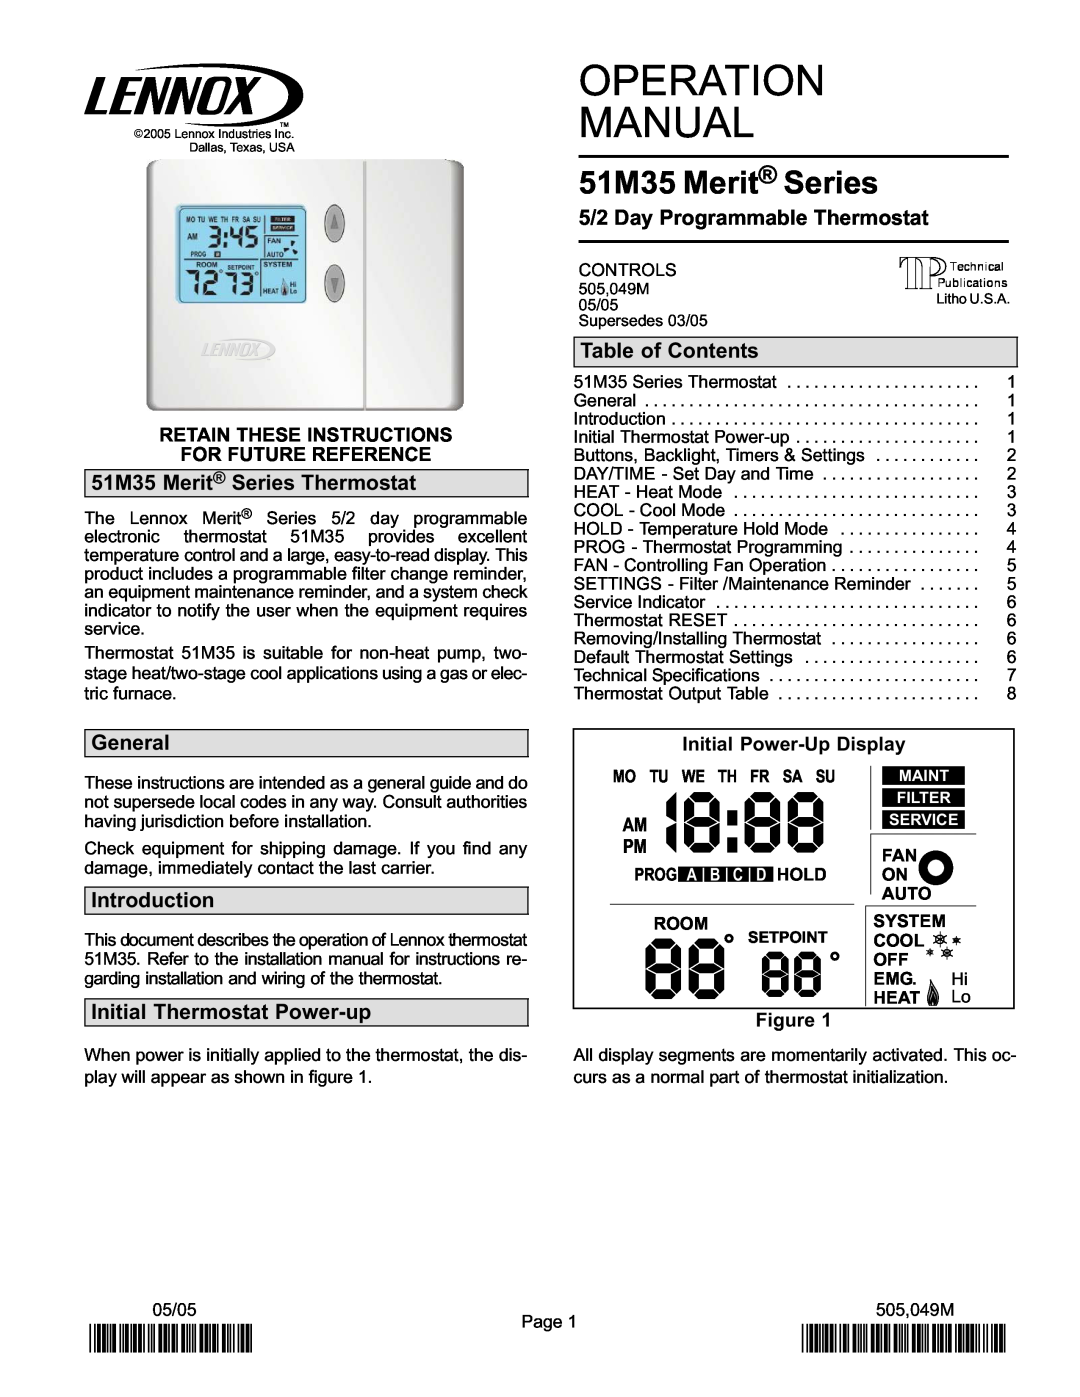 Lennox International Inc 51M37 P505049M, 51M35 Merit Series Thermostat, I8, 2P0505, General, Introduction 